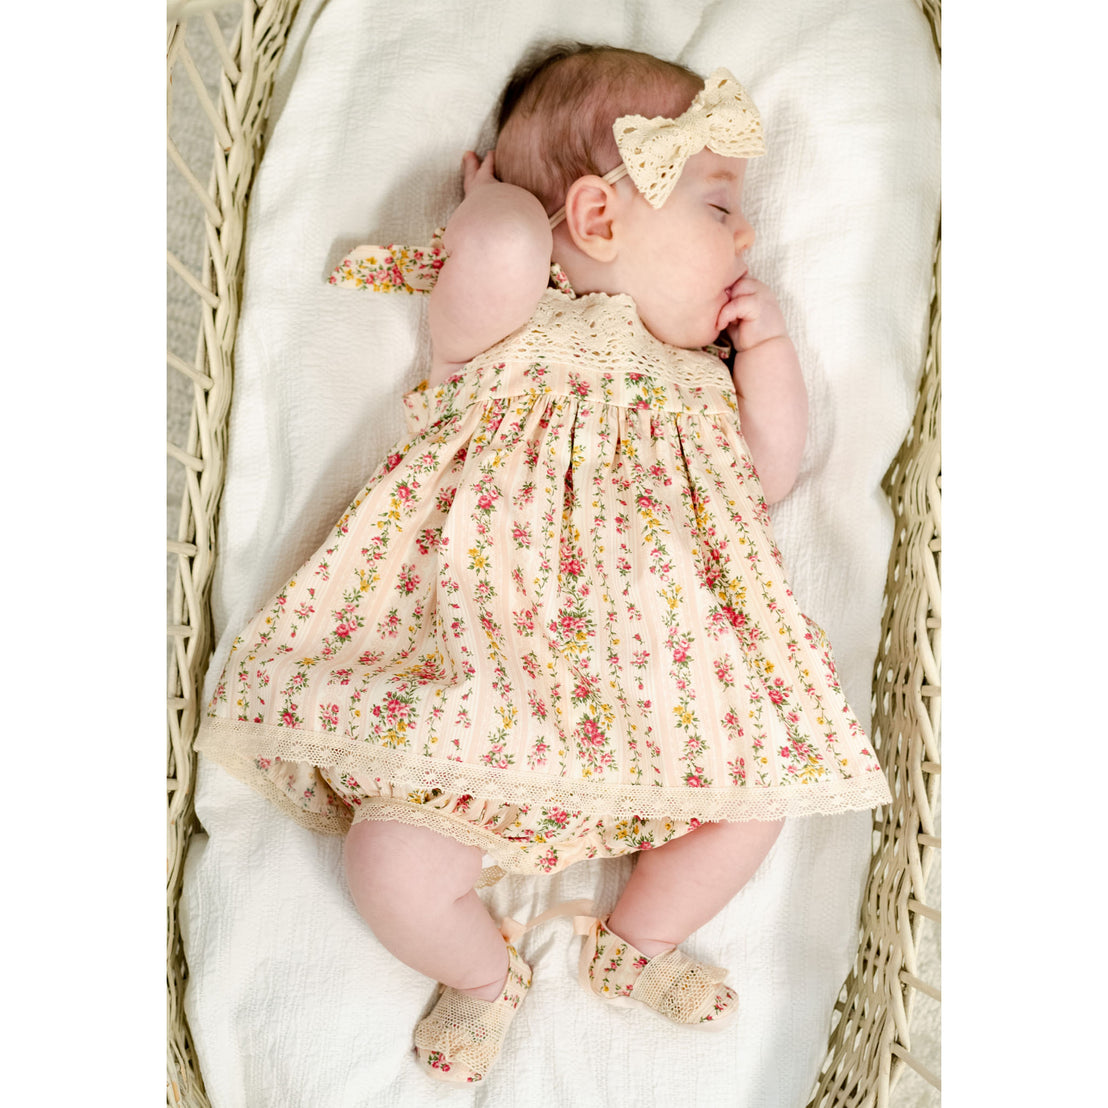 Newborn baby girl wearing the "Blush" Eloise Romper Dress and matching Eloise Bow Headband. 